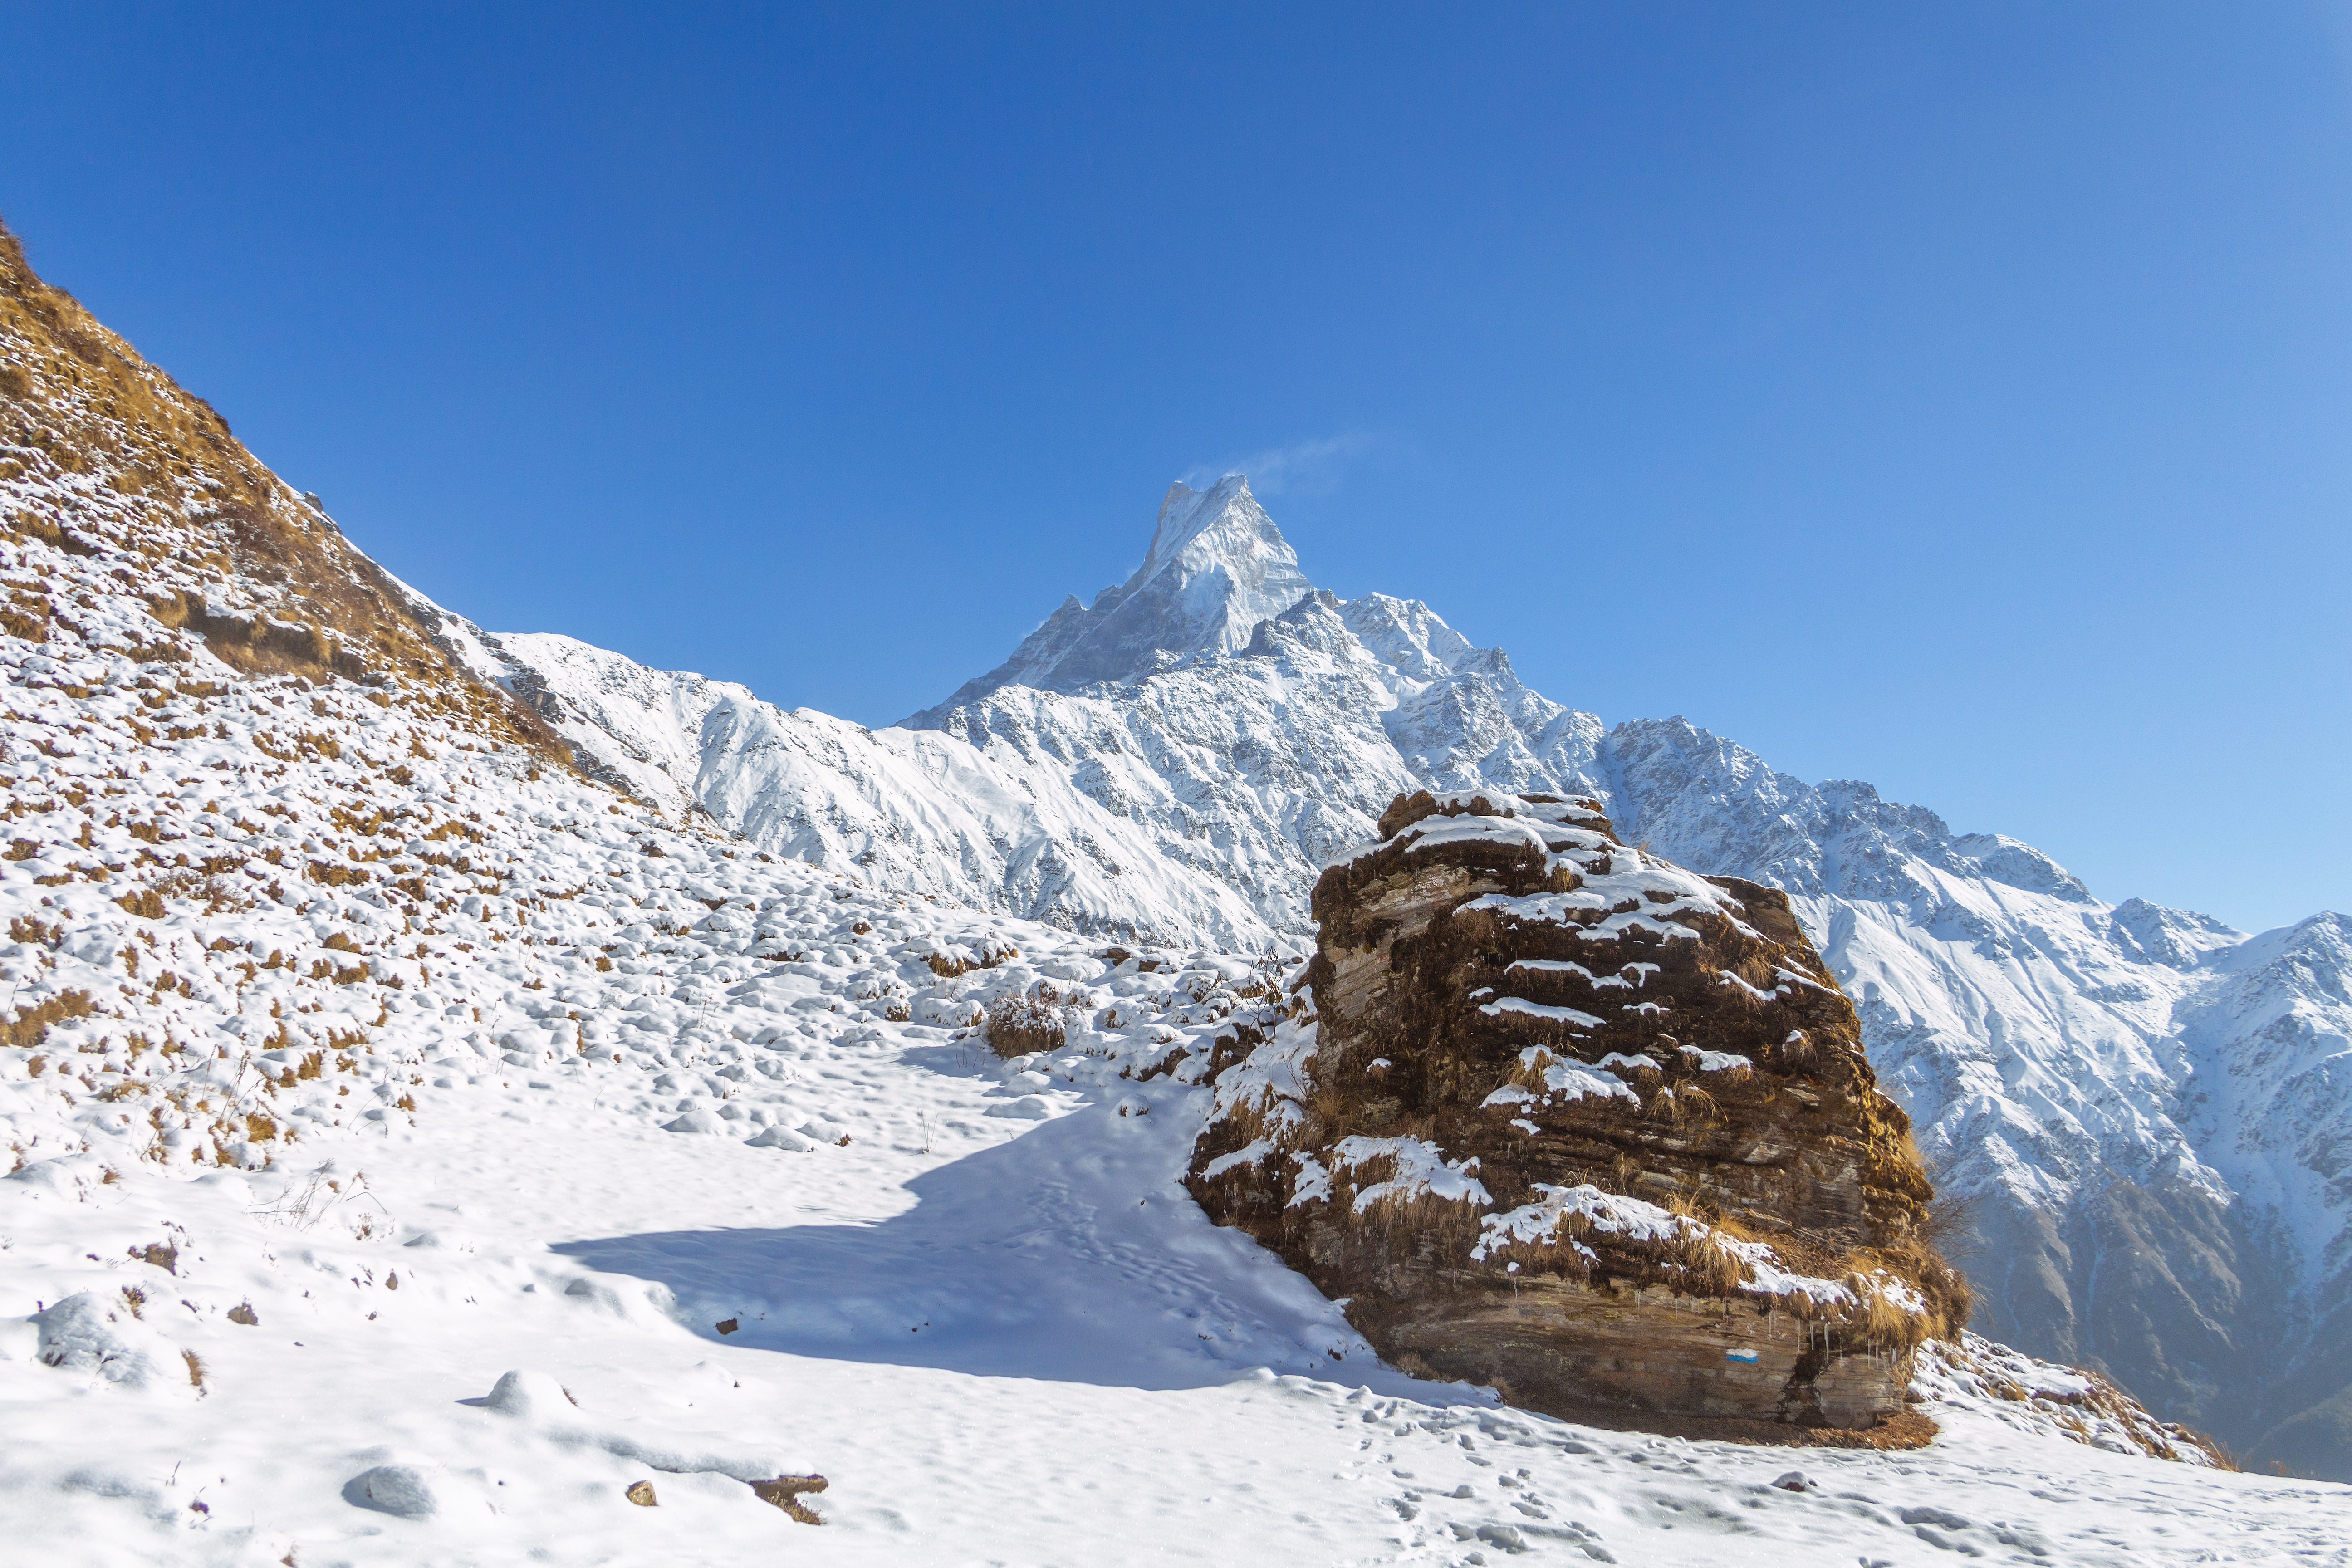 General 5184x3456 MachhapuchhreHimal Nepal landscape mountains snow nature